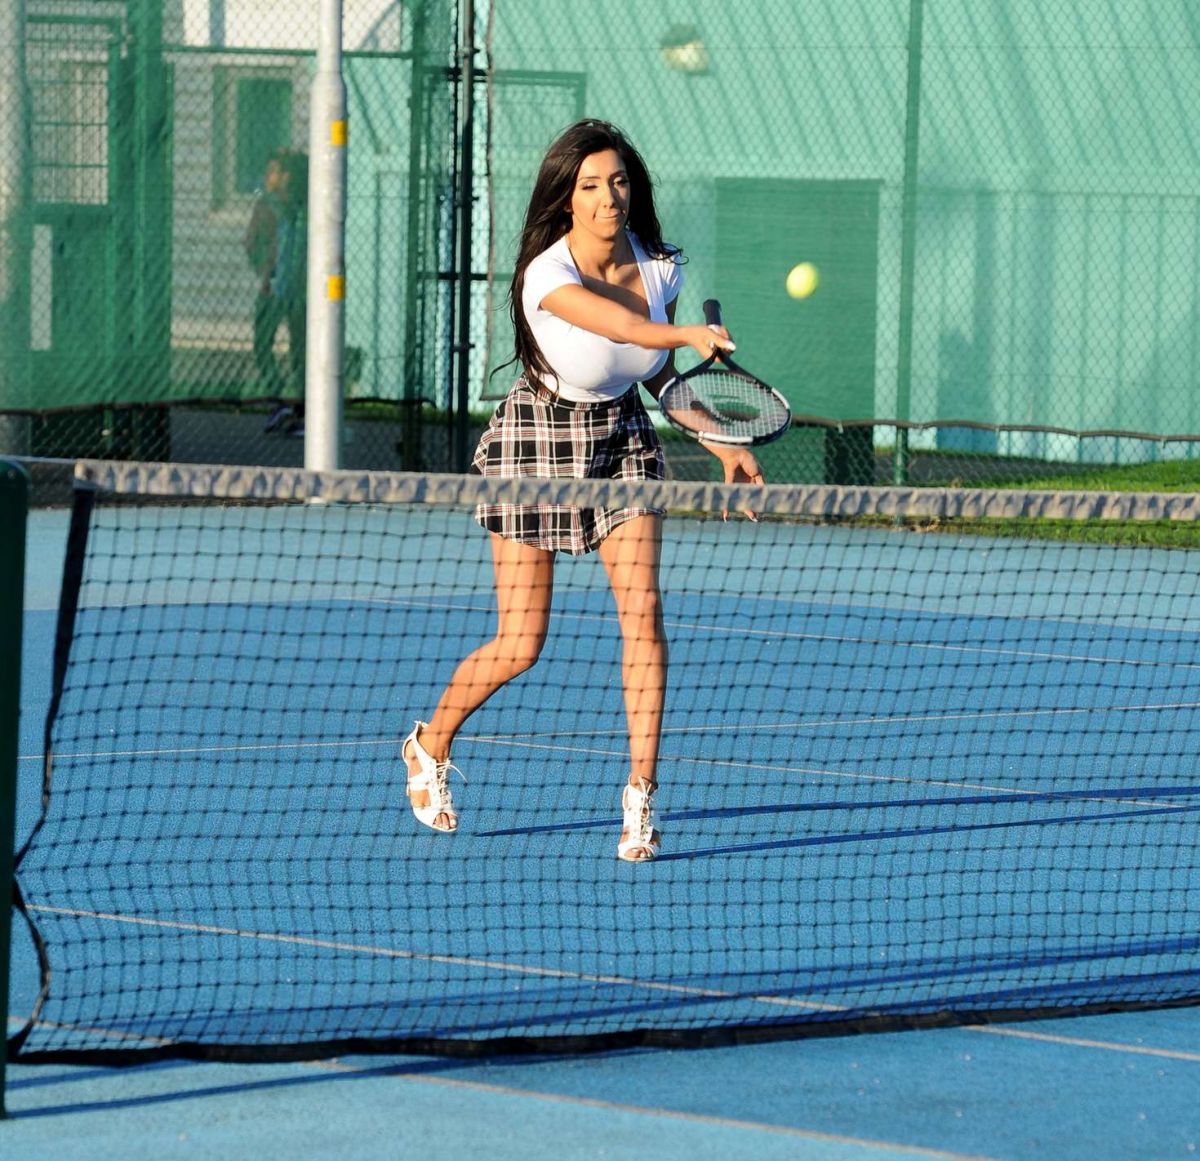 chloe-khan-playing-tennis-at-a-court-in-manchester-10-15-2016_3.jpg